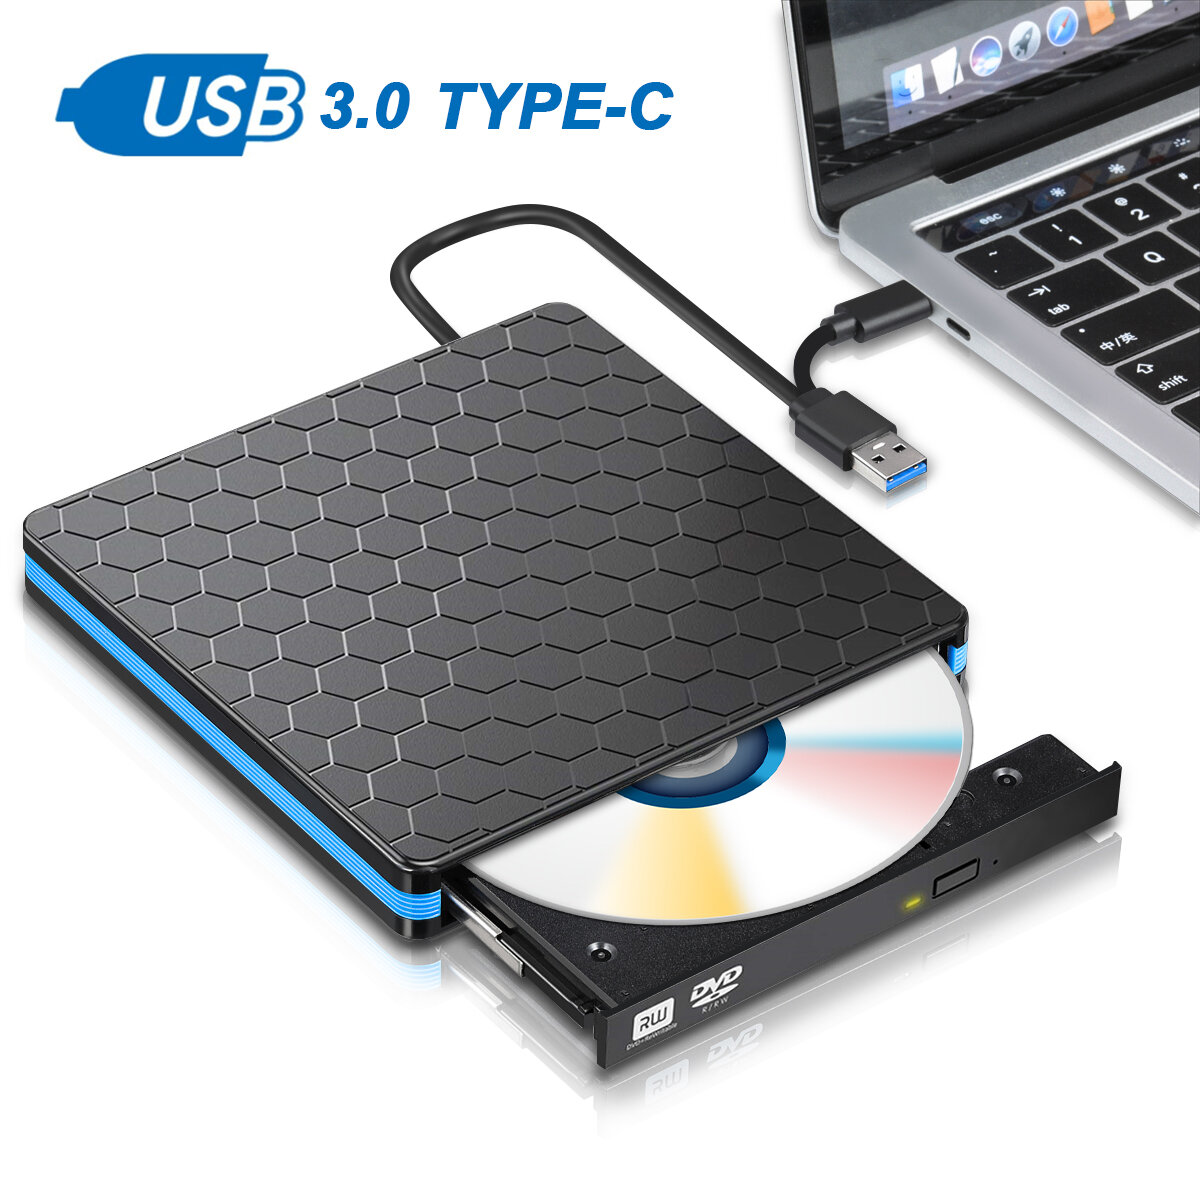 

BlitzMax BM-DV2 USB 3.0 Type C External CD DVD RW Optical Drives for win 7/8/10 /XP Desktop